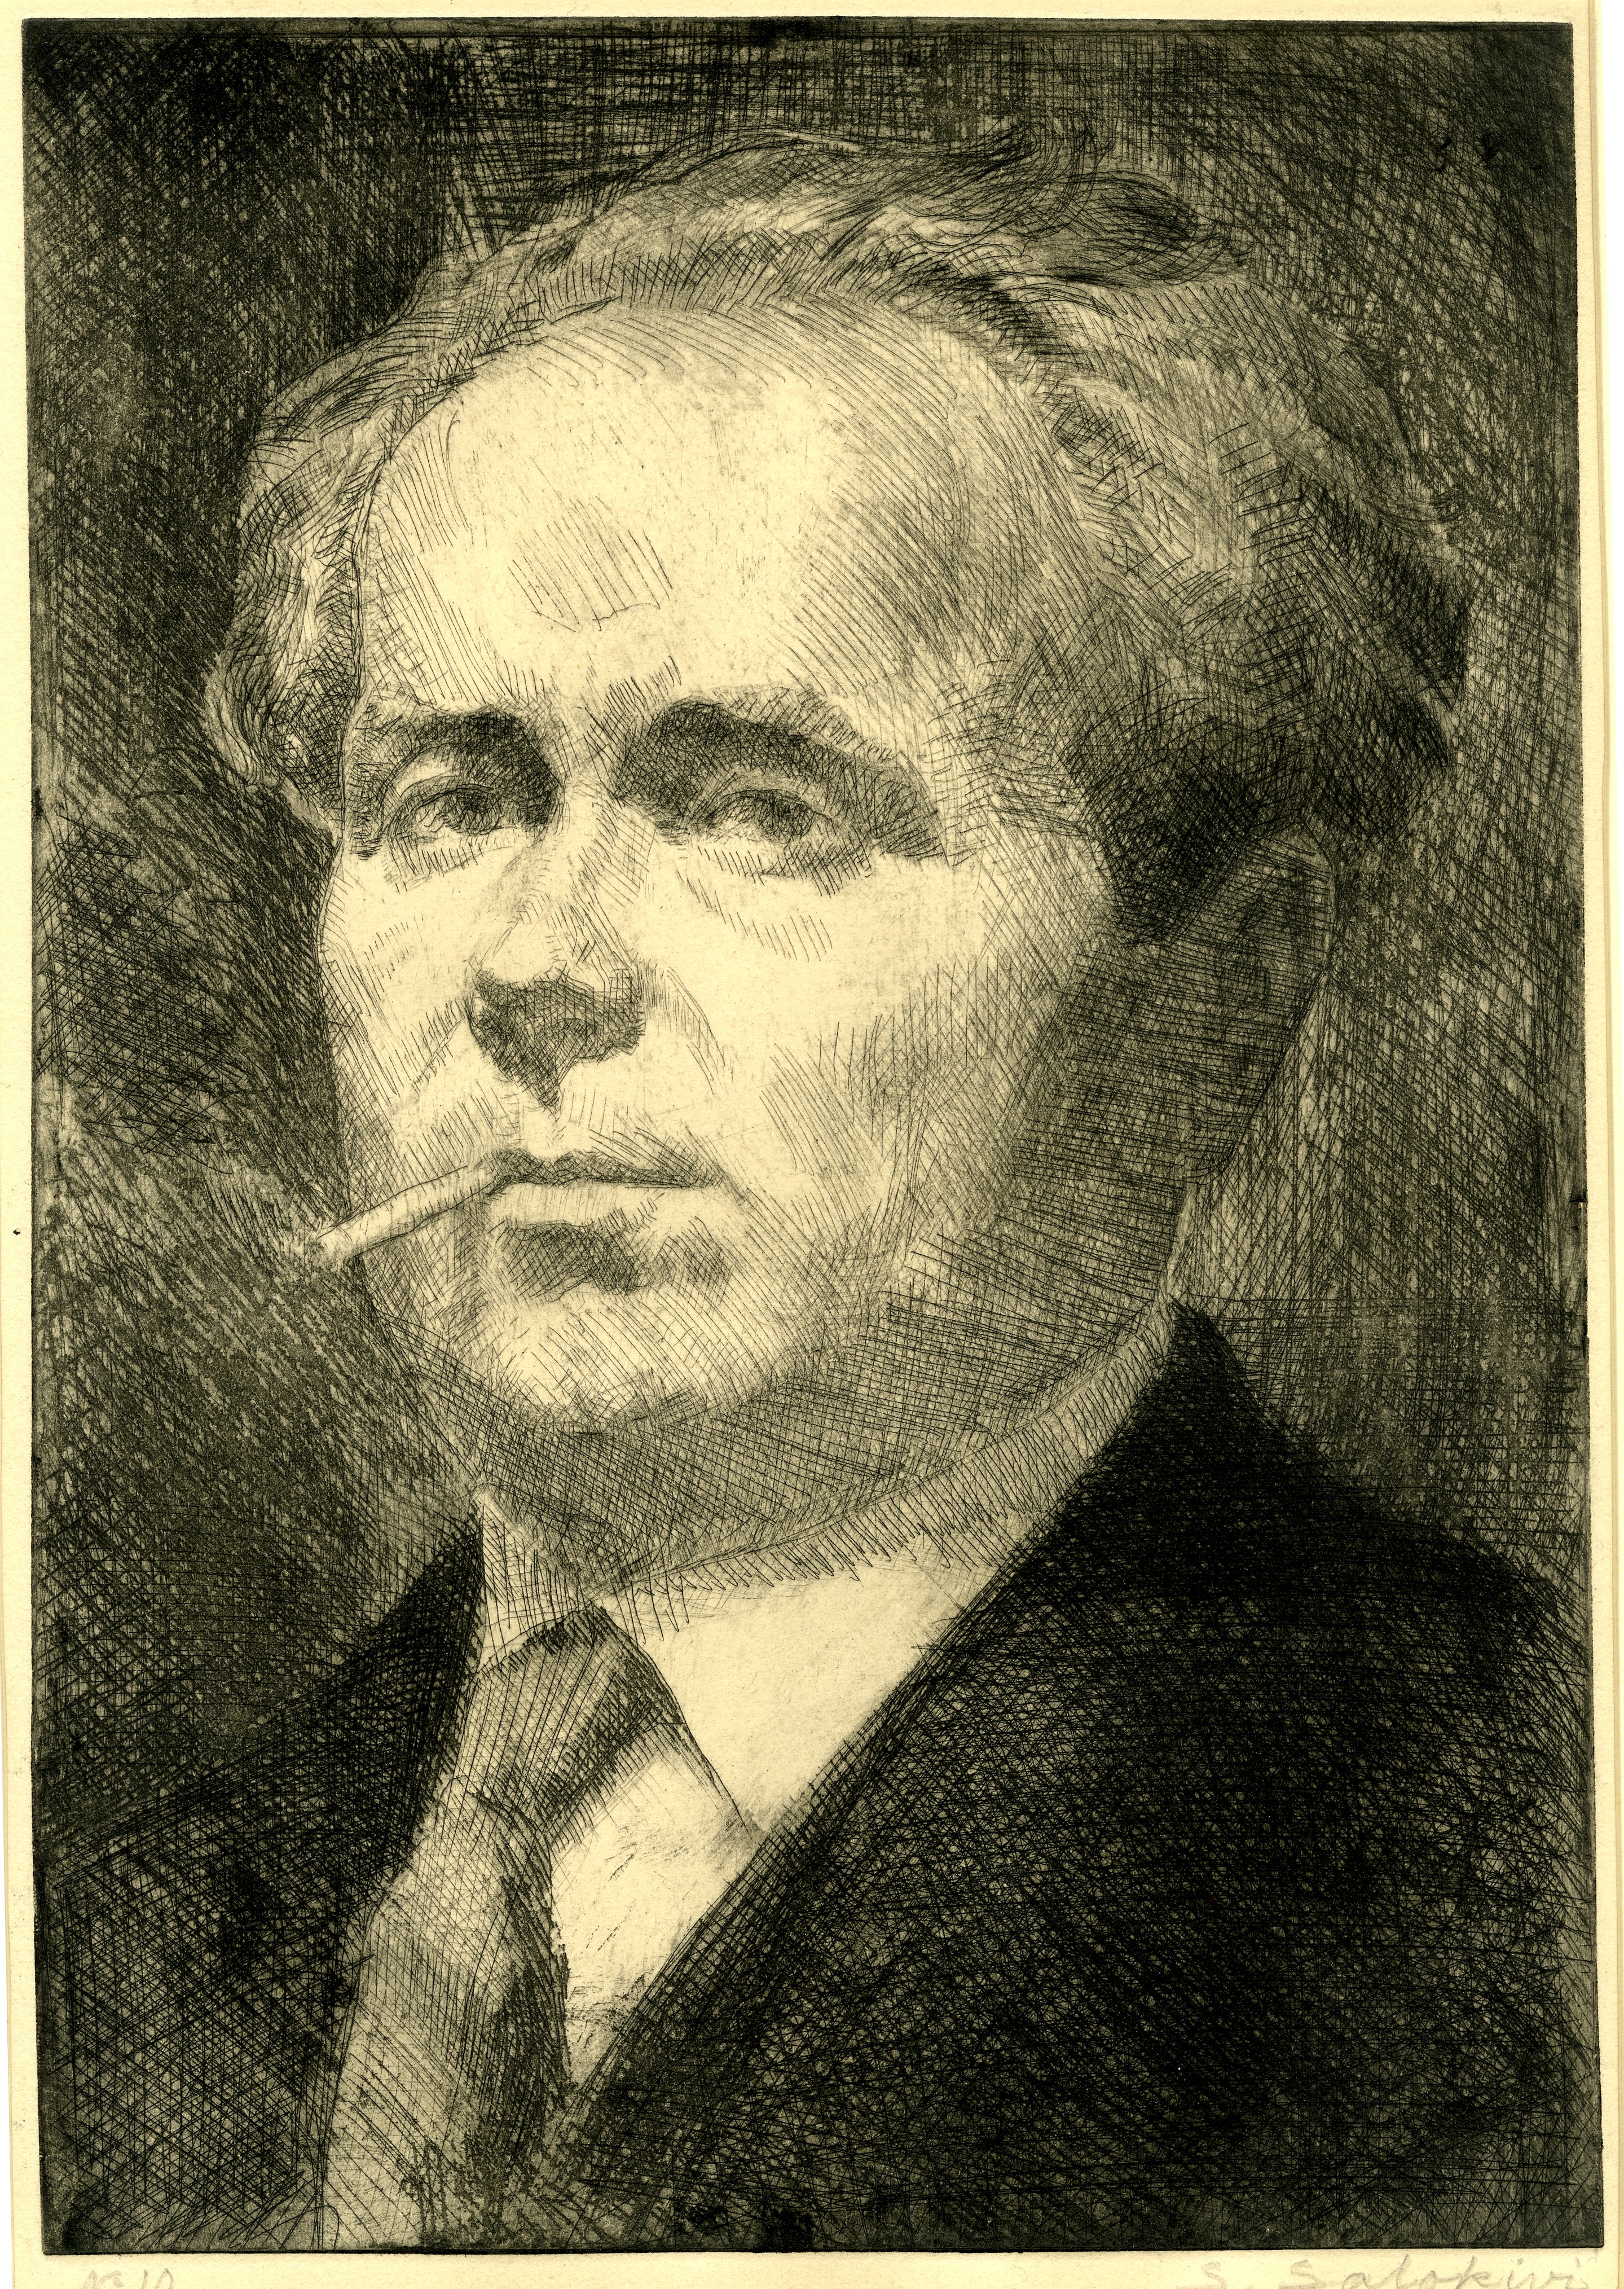 Portrait of the artist (circa 1938)